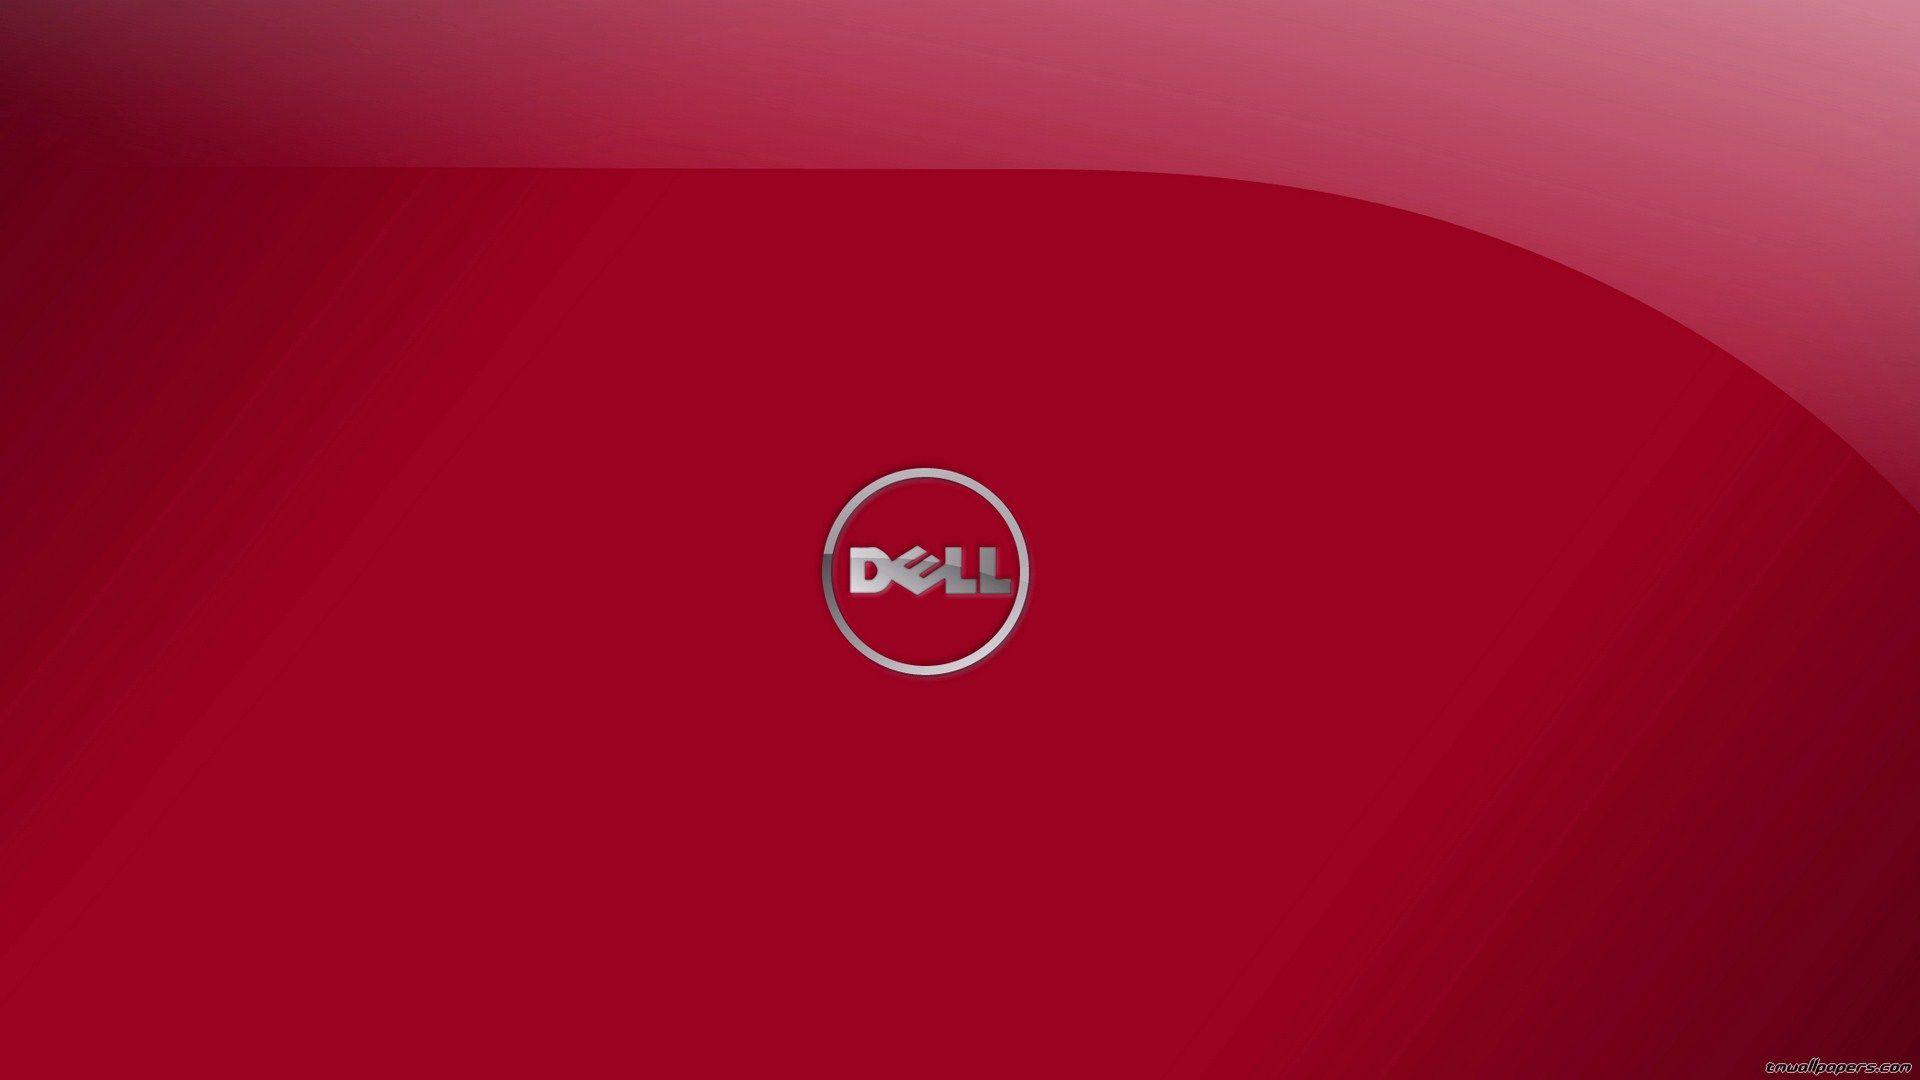 Dell blue background HD Wallpaper - WallpaperFX